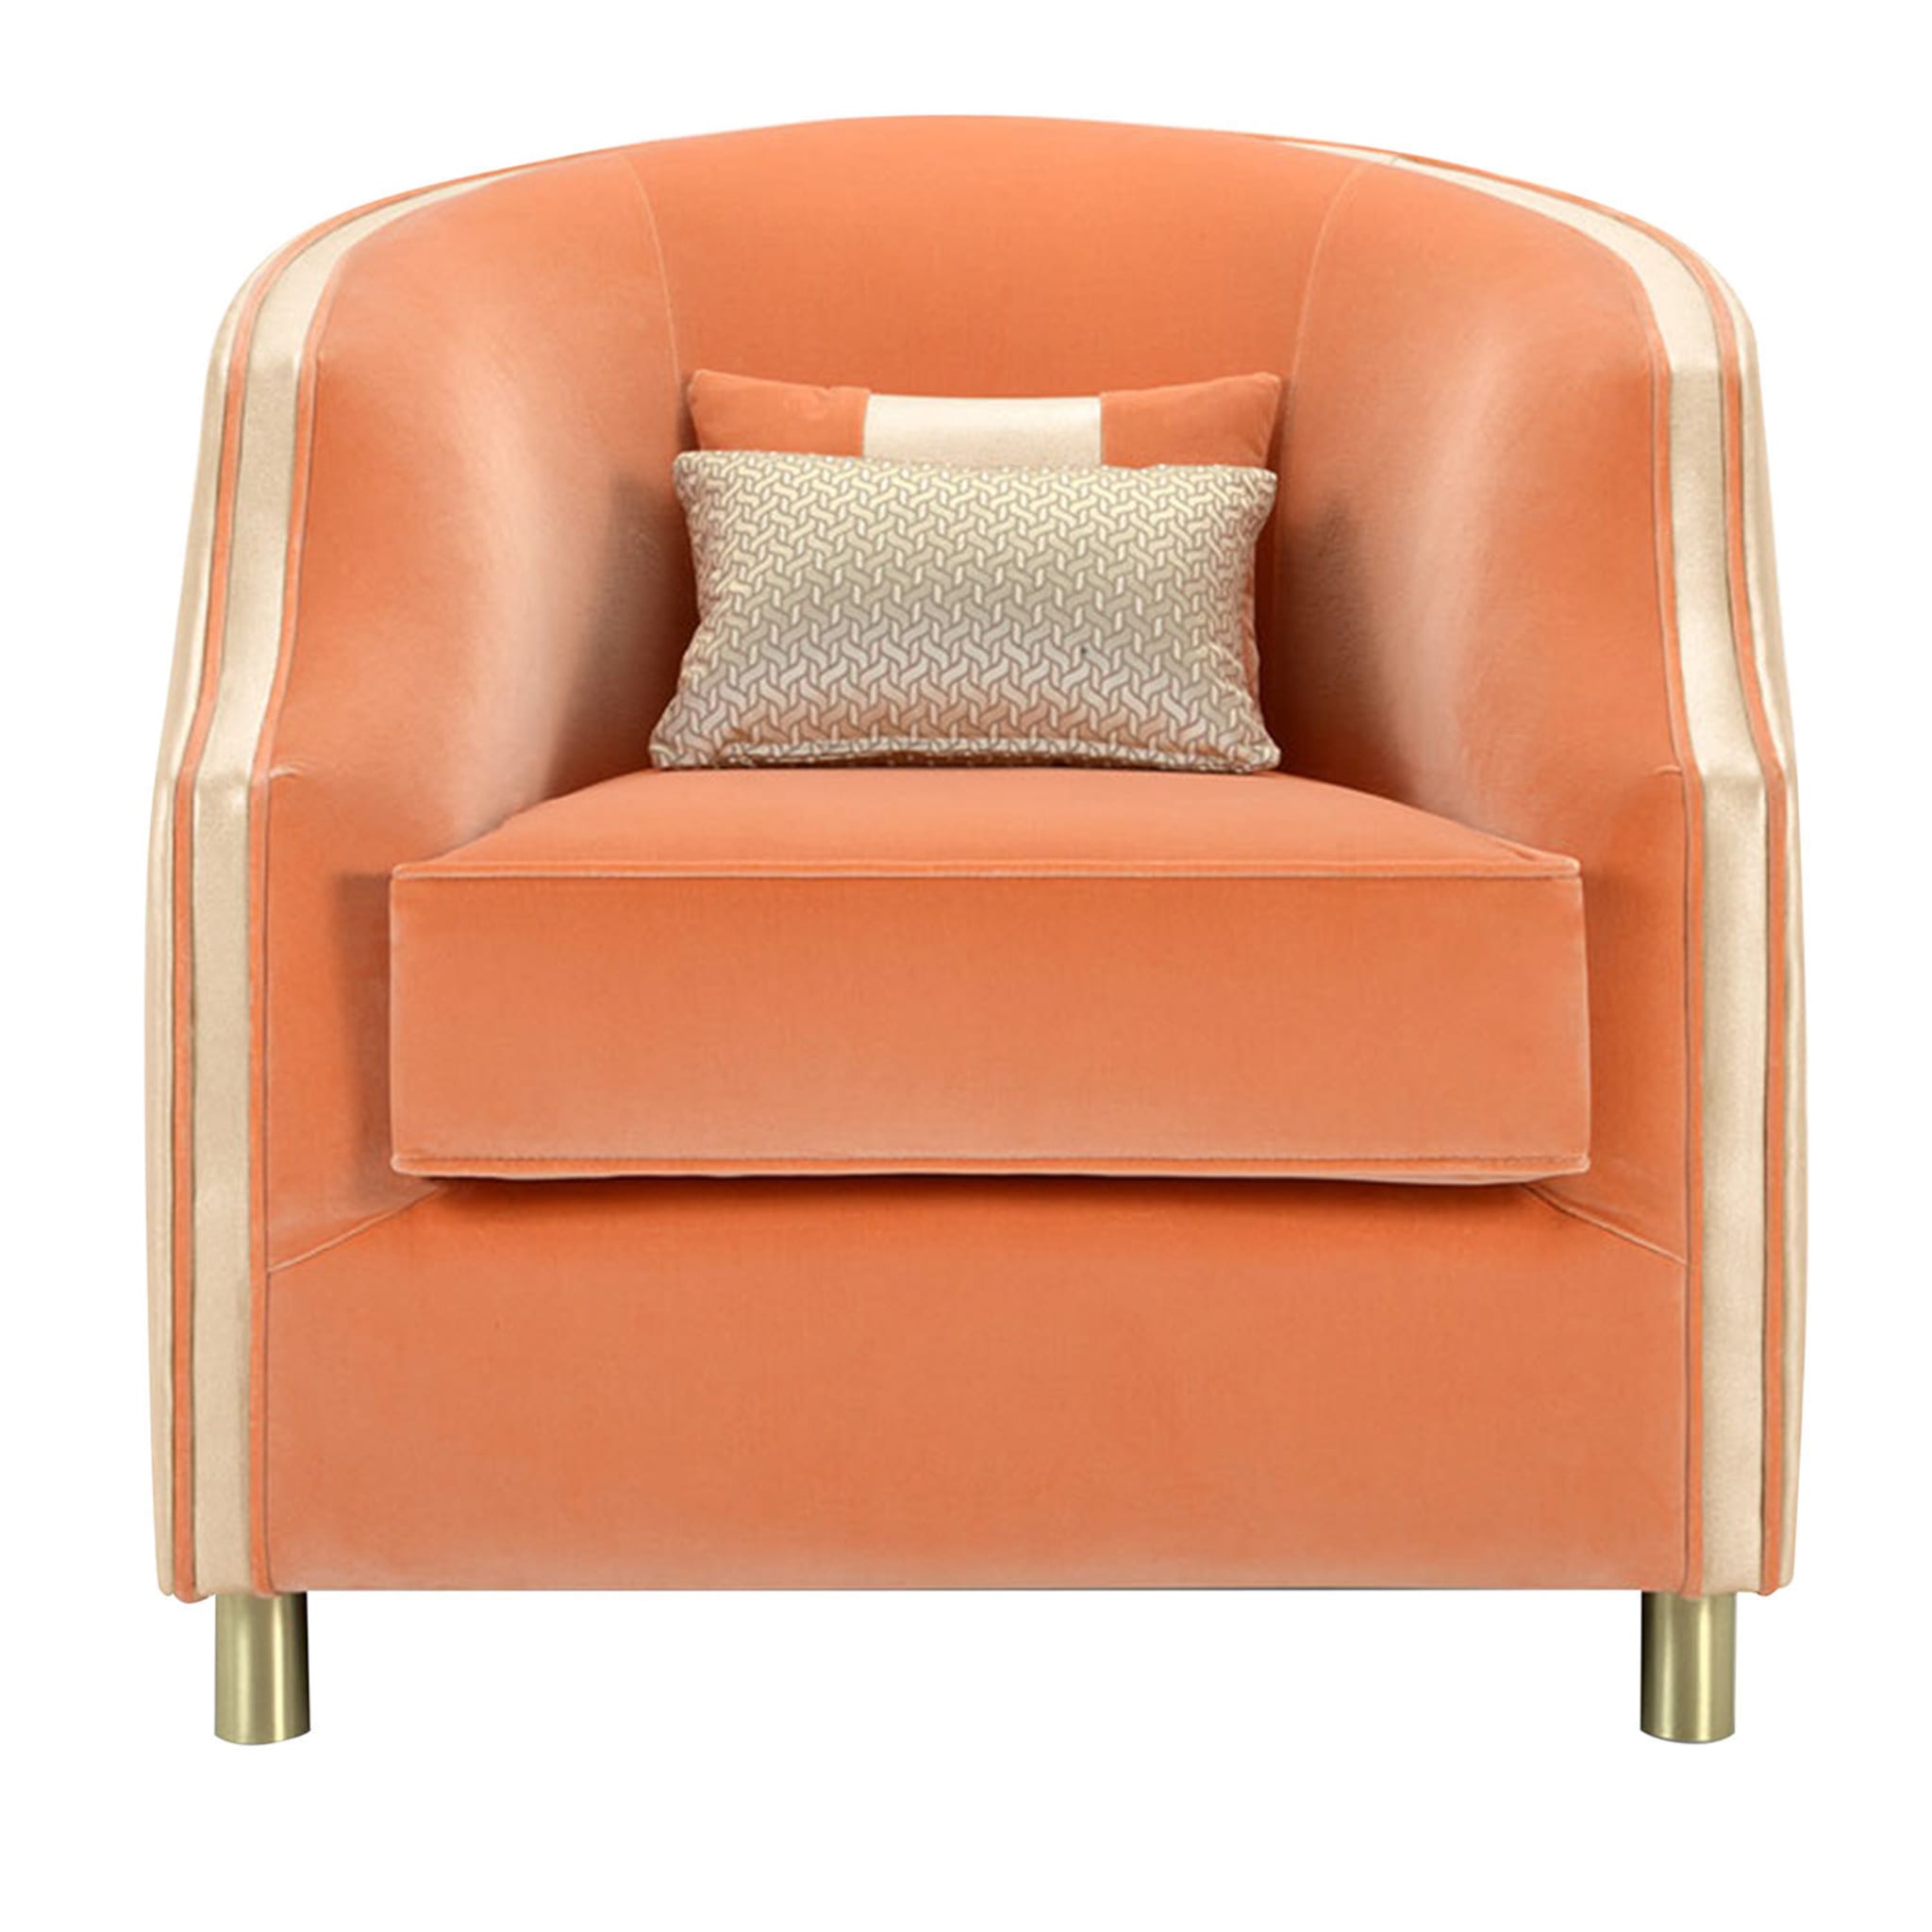 Cleio Small Orange Armchair - Main view